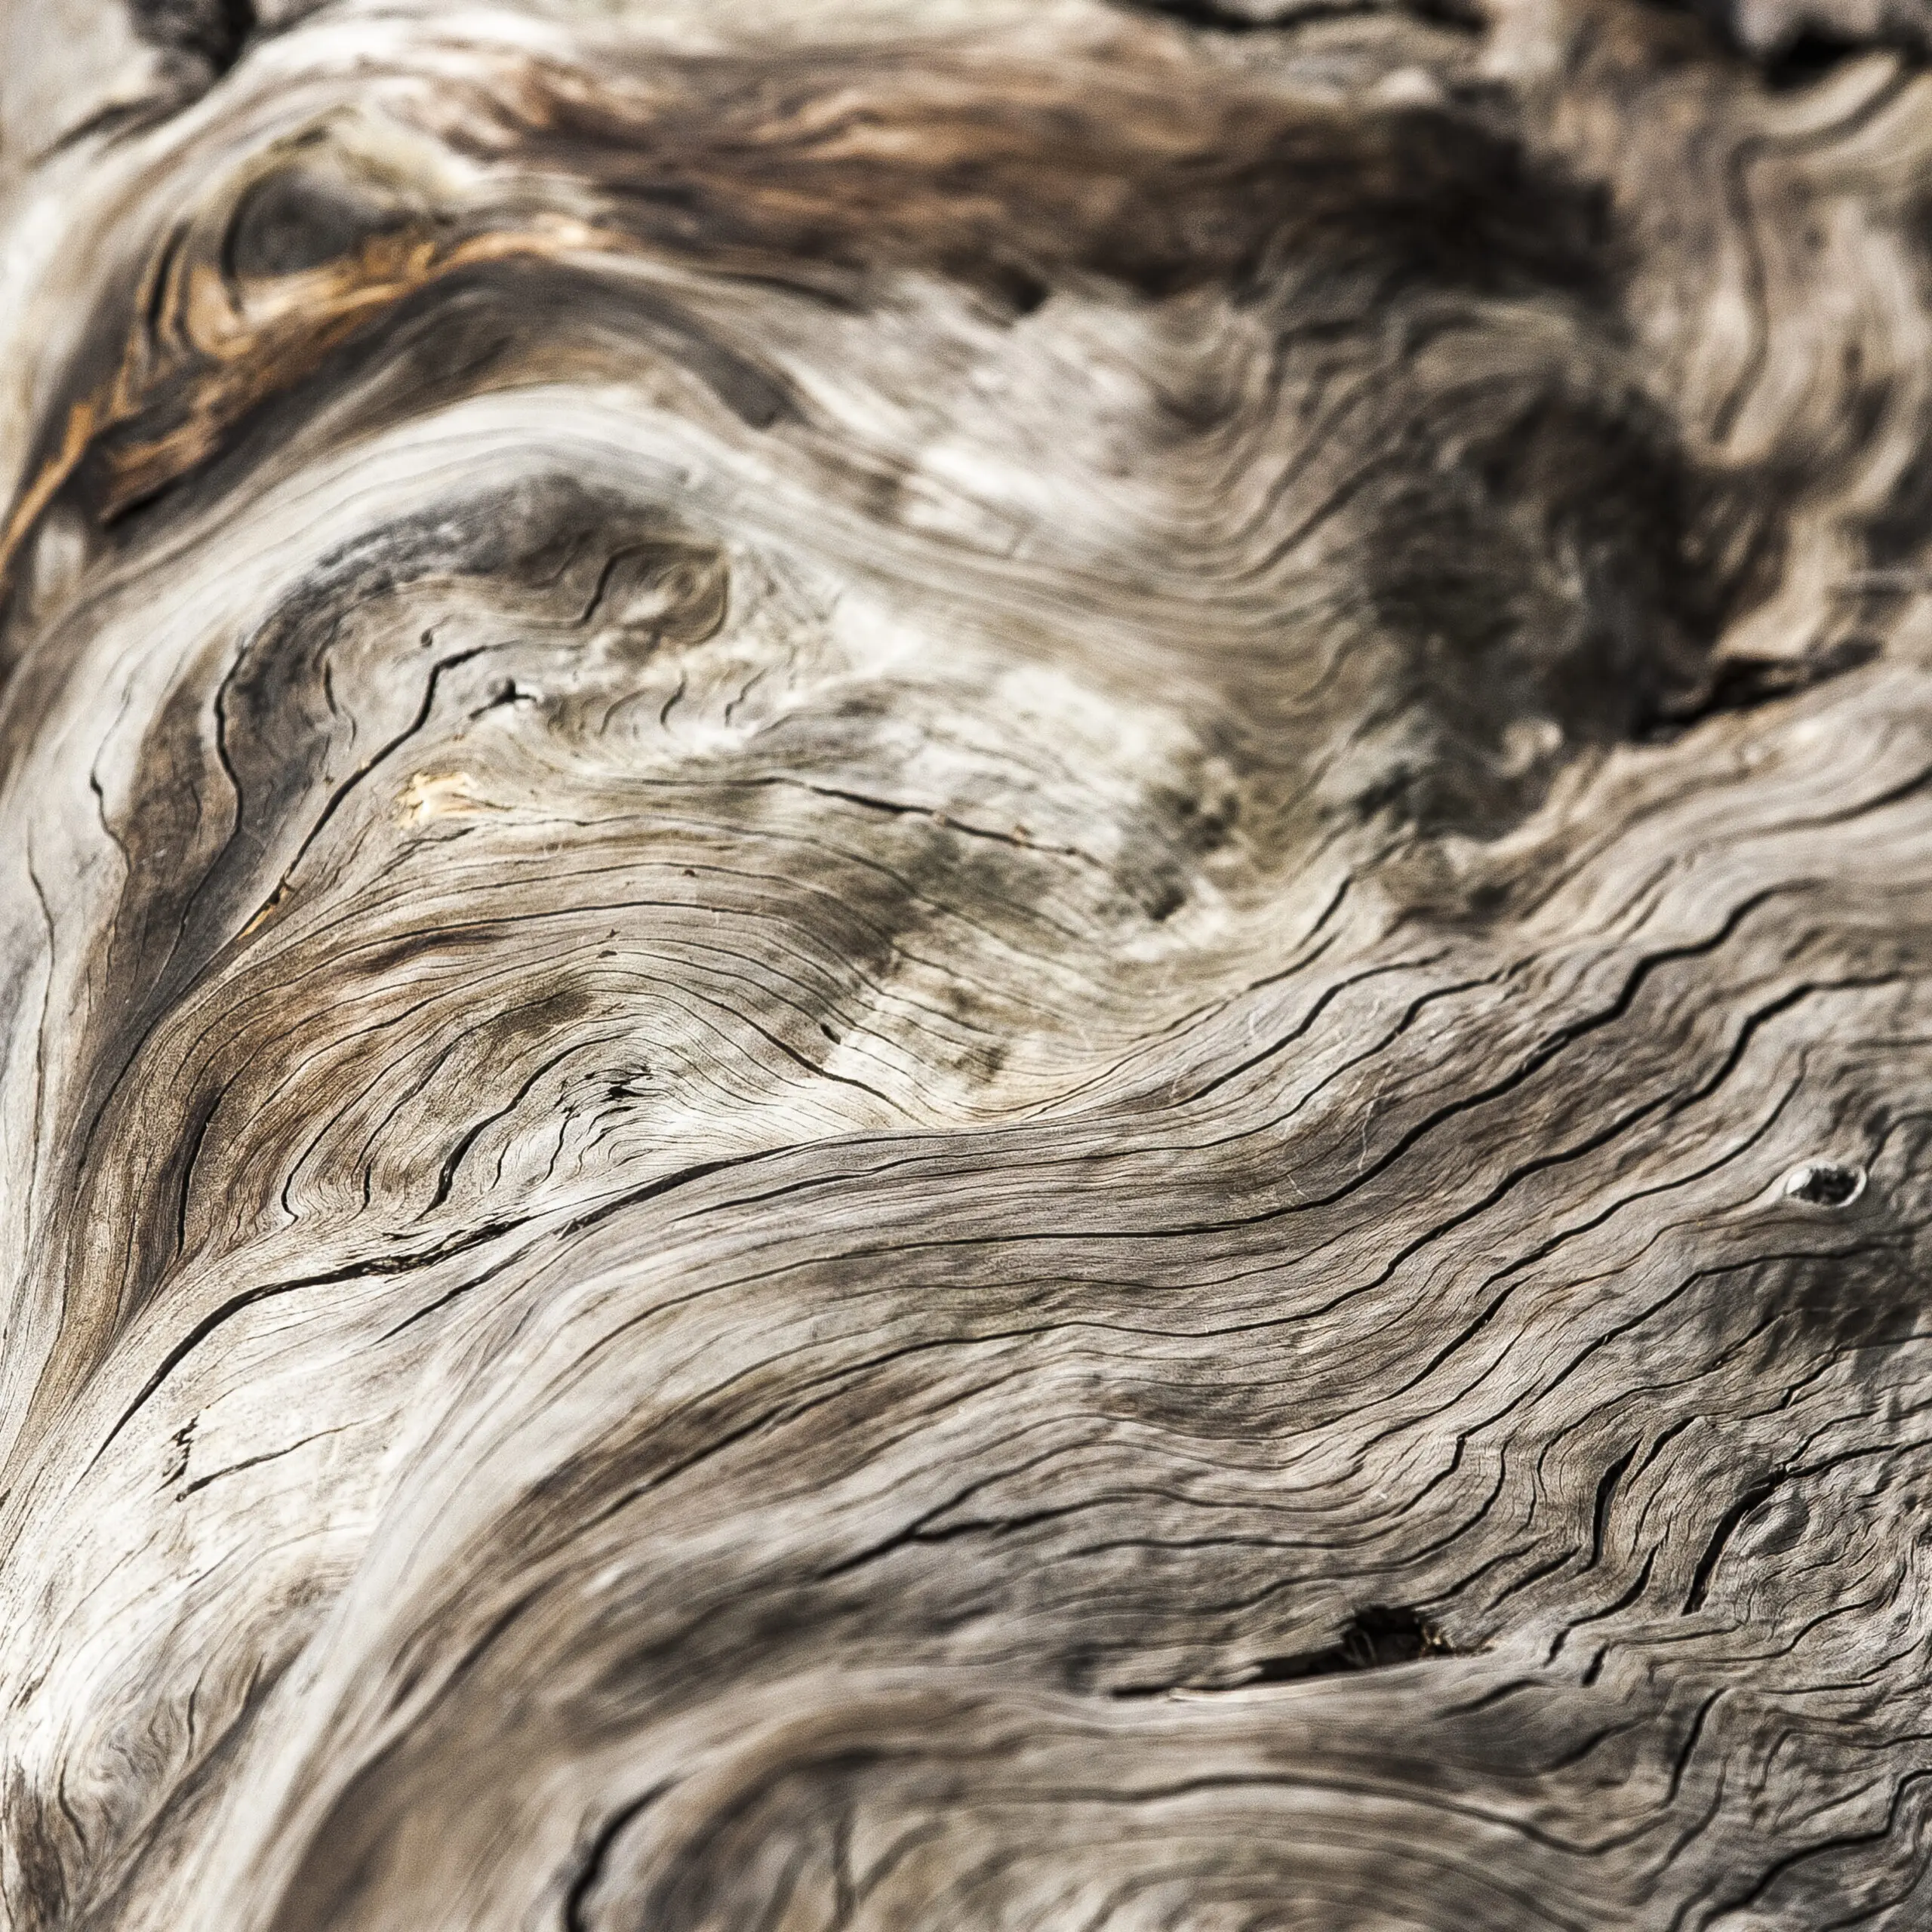 Wandbild (370) Serengeti Wood präsentiert: Technik,Details und Strukturen,Zen & Wellness,Abstrakt,Natur,Makro